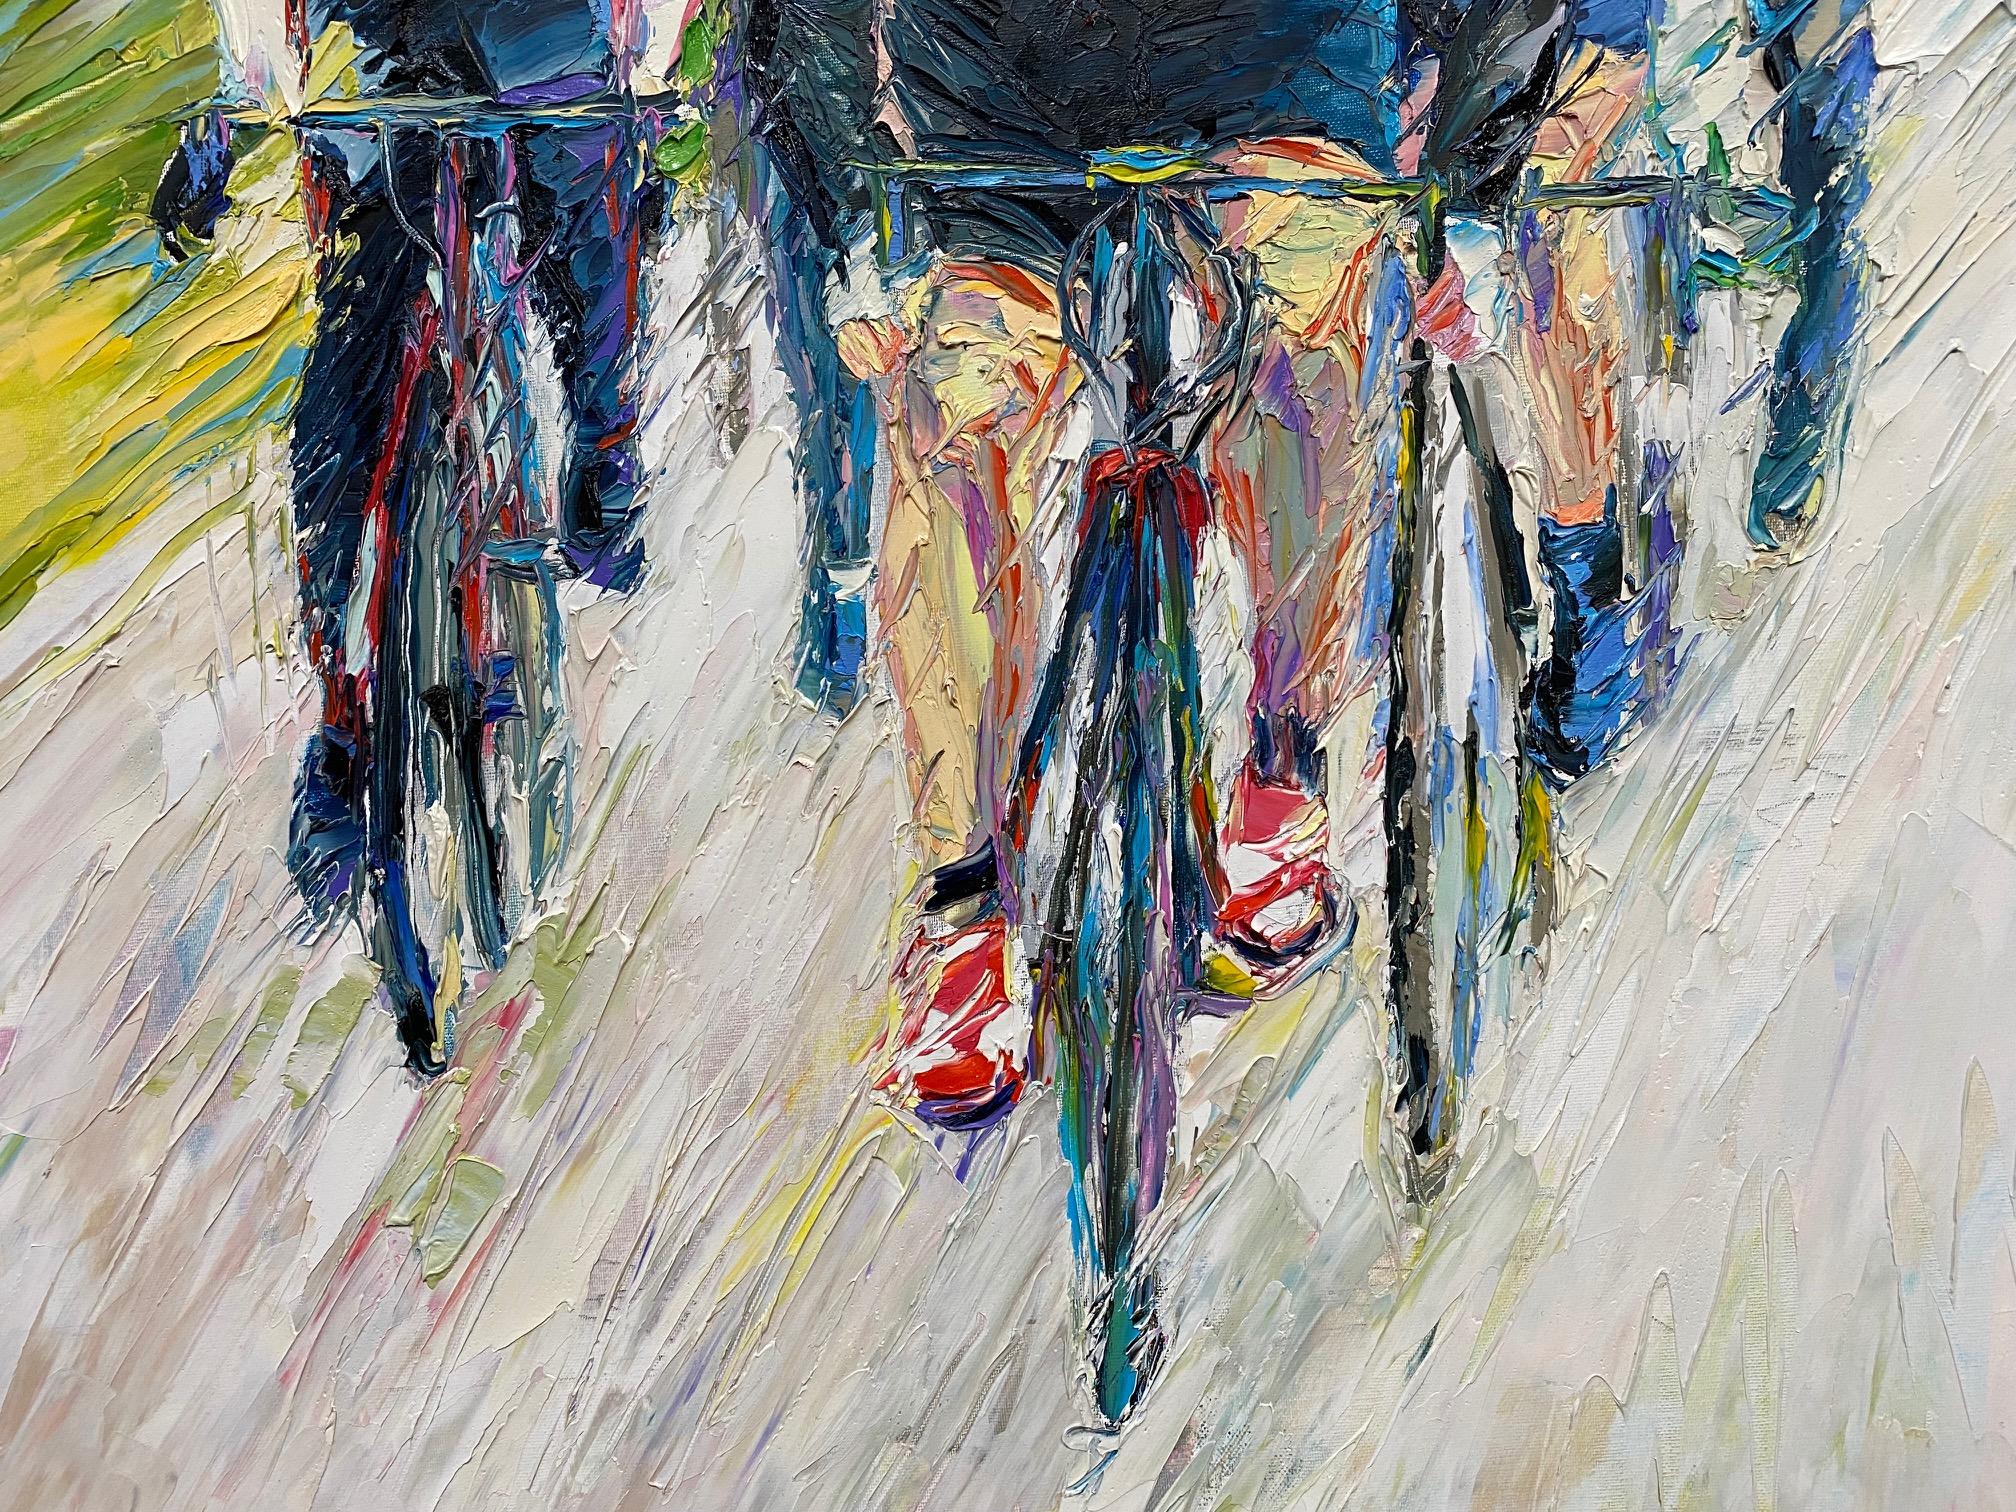 Tour de France, original 31x40 expressionist figurative landscape - Beige Figurative Painting by Serge Ovcaruk